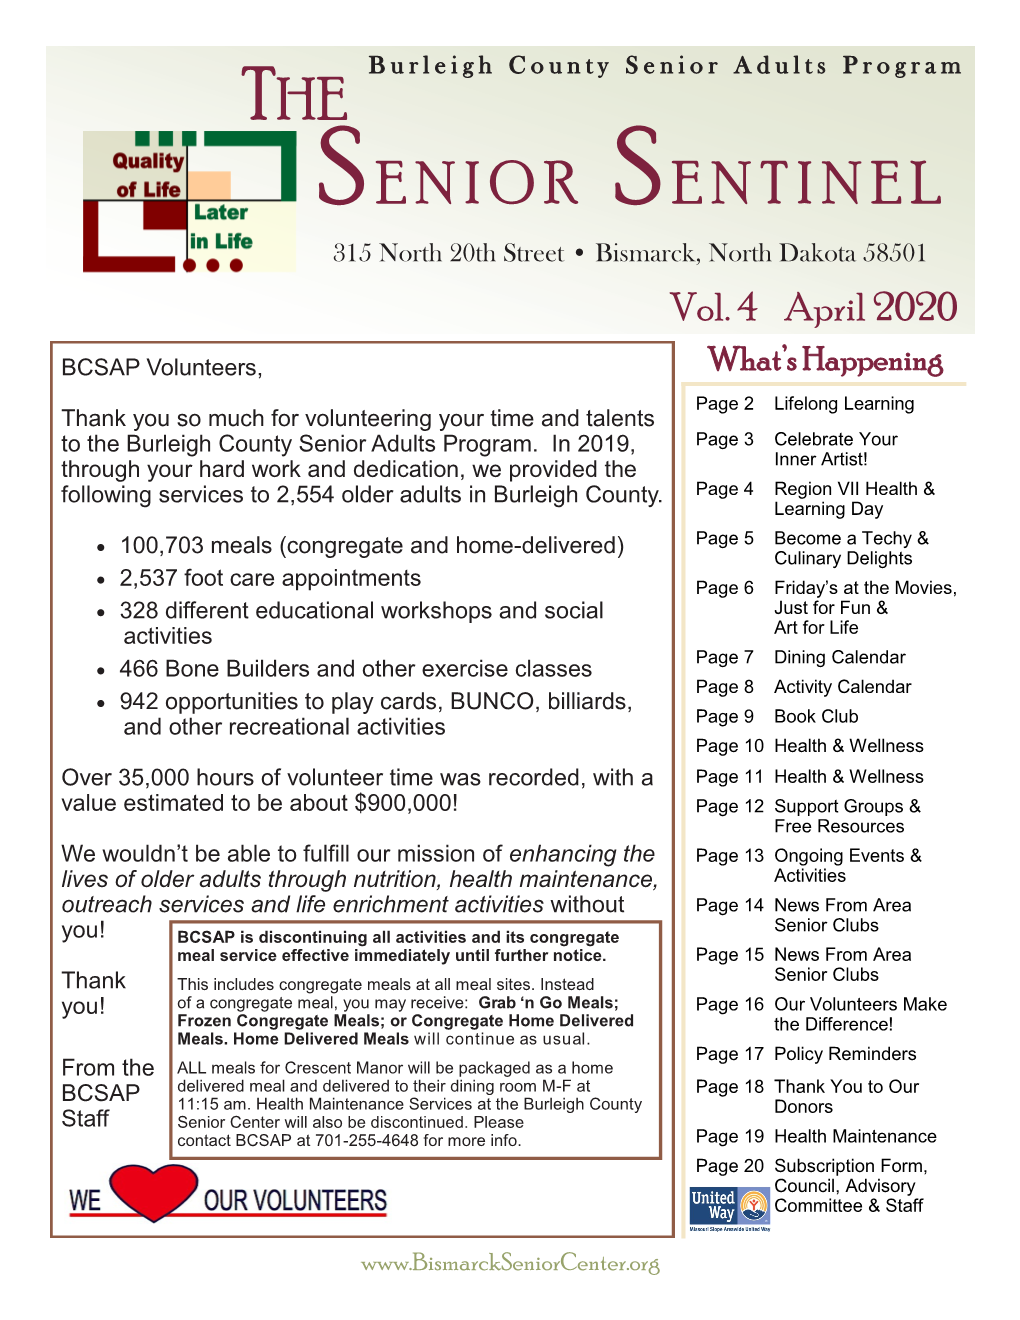 The Senior Sentinel | 3 Region VII Health & Learning Day